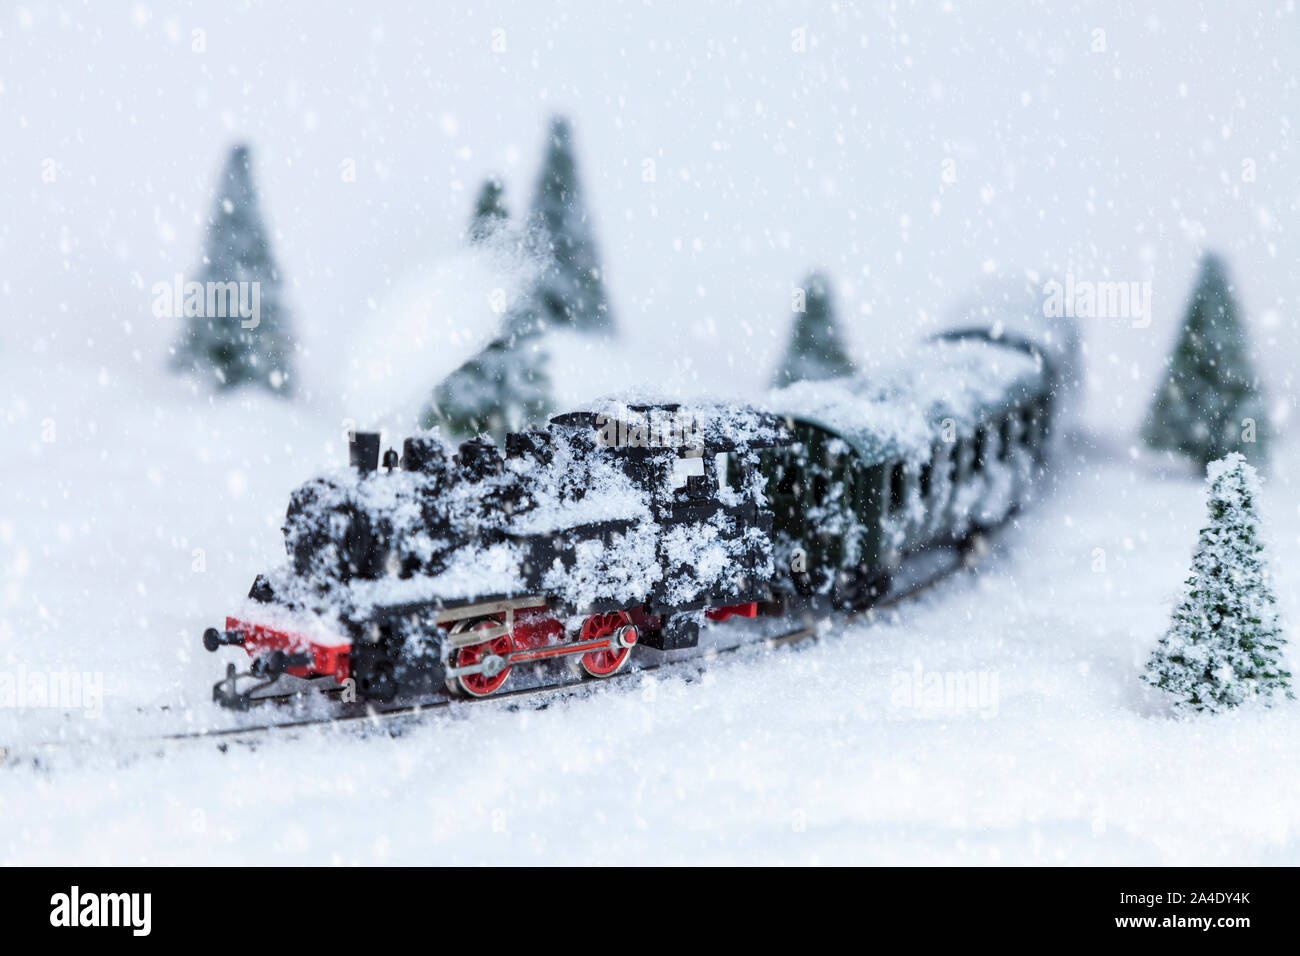 Passenger train in snowy winter landscape Stock Photo